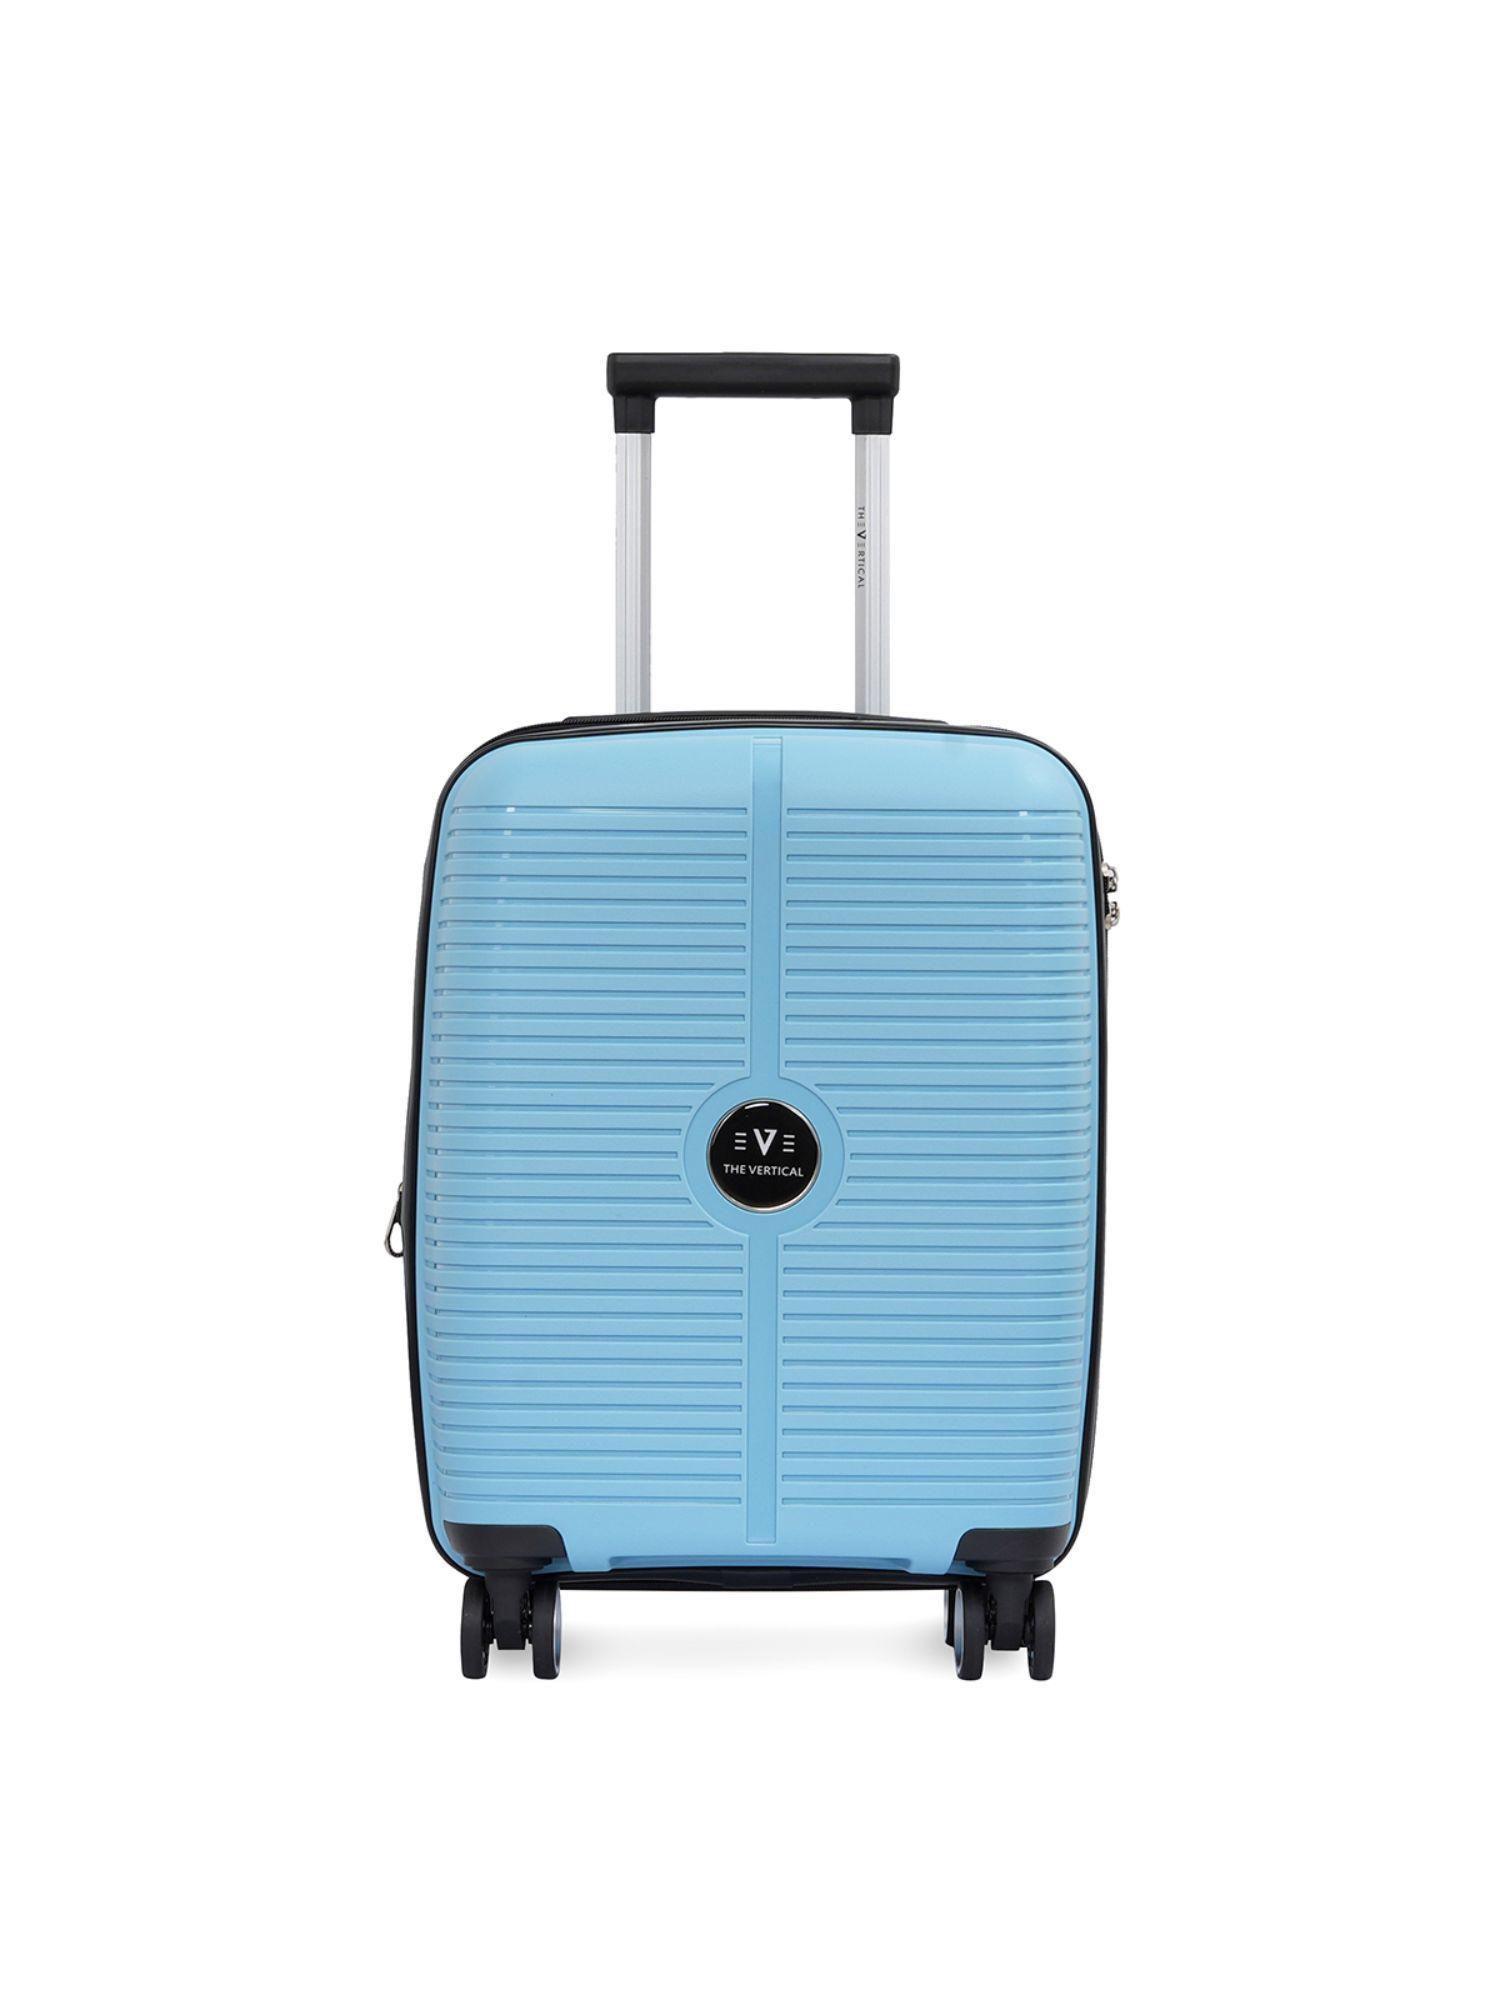 stellar unisex light blue hard luggage cabin trolley for travel